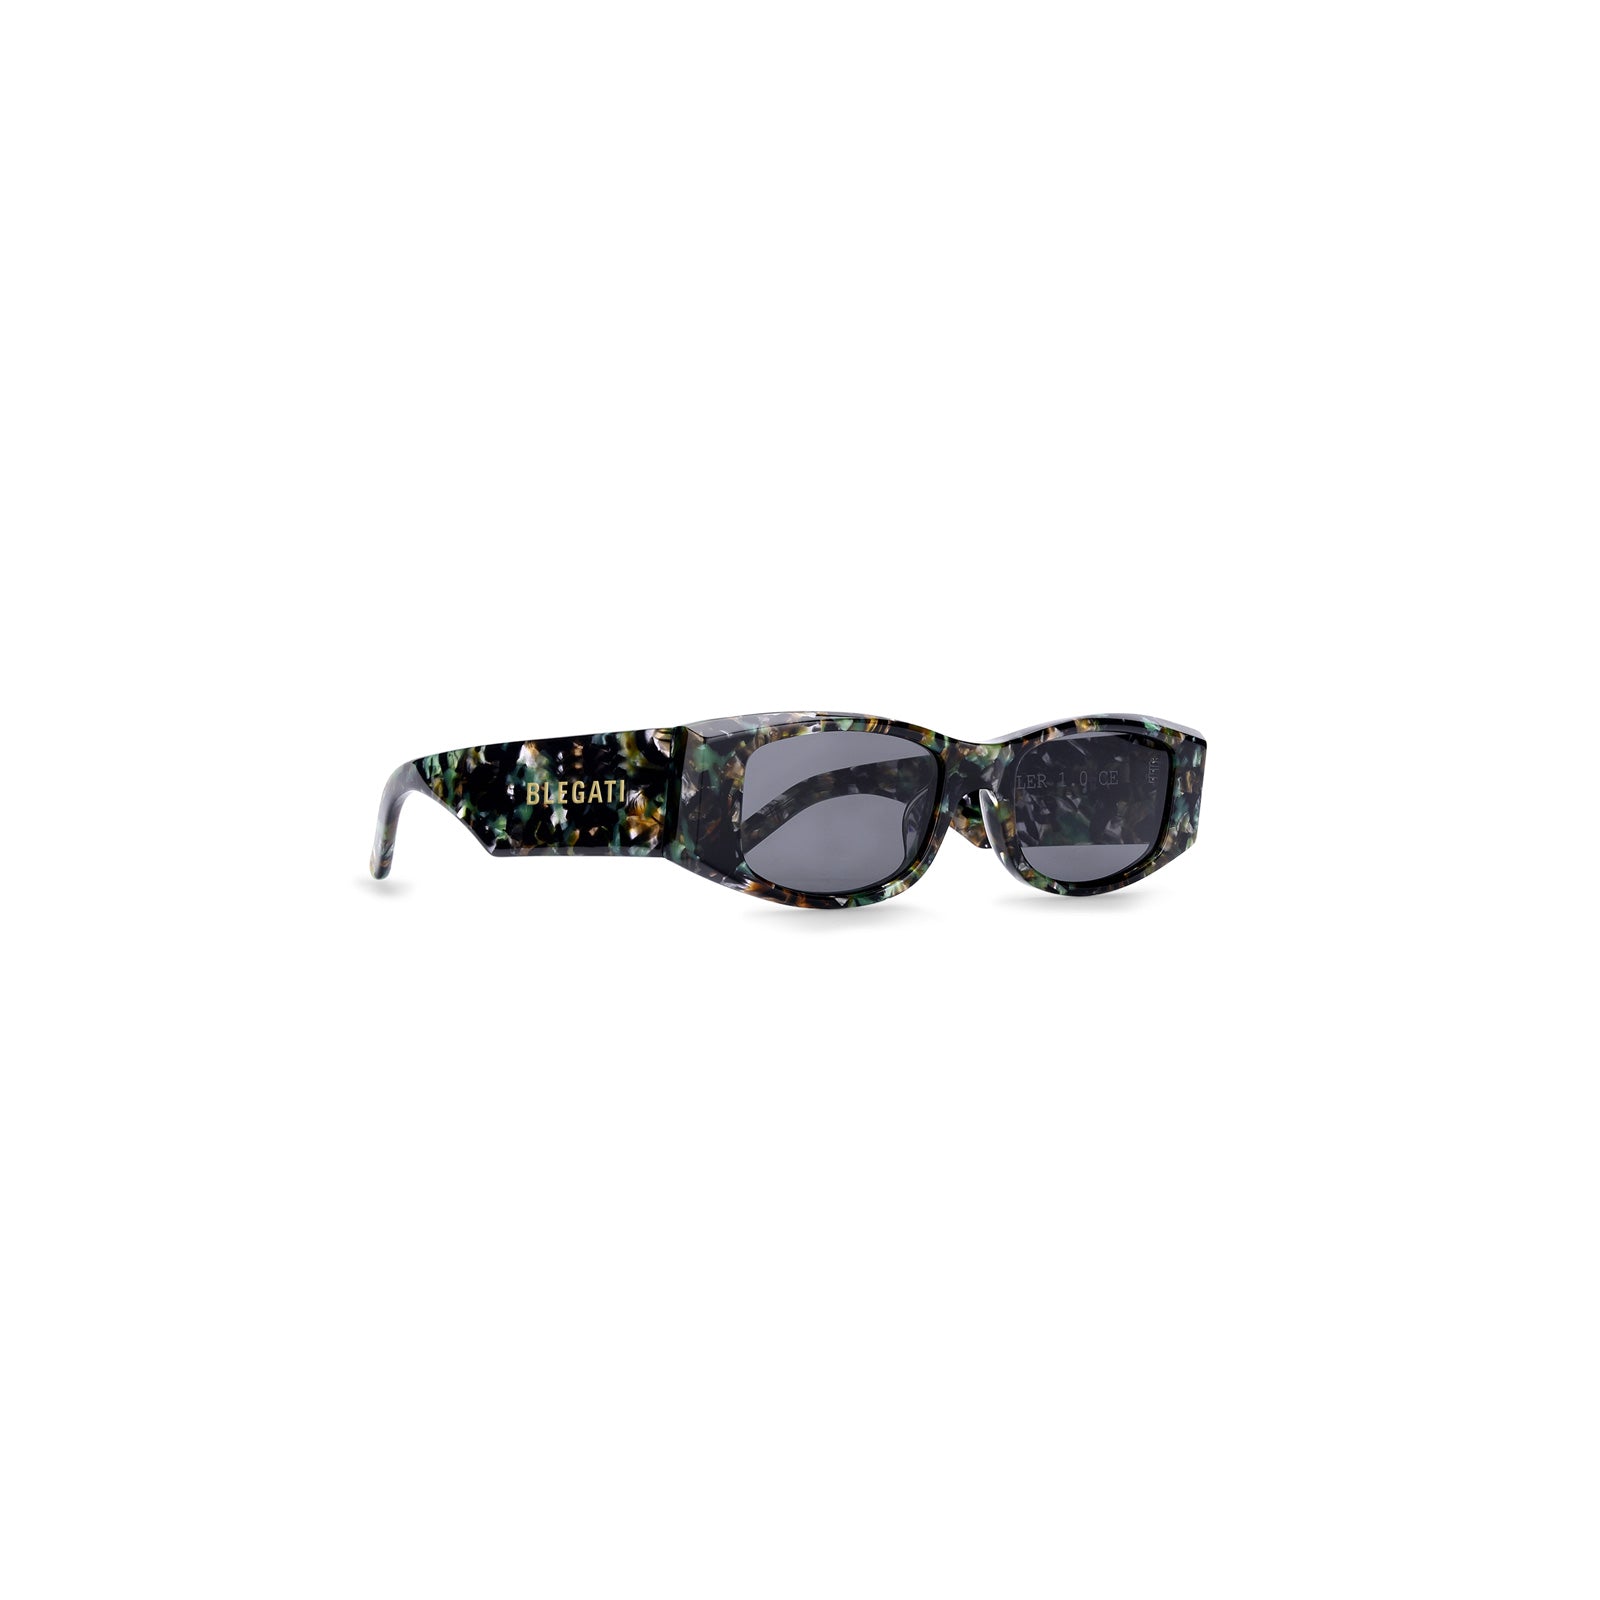 camo rectangle sunglasses - front view, blegati logo